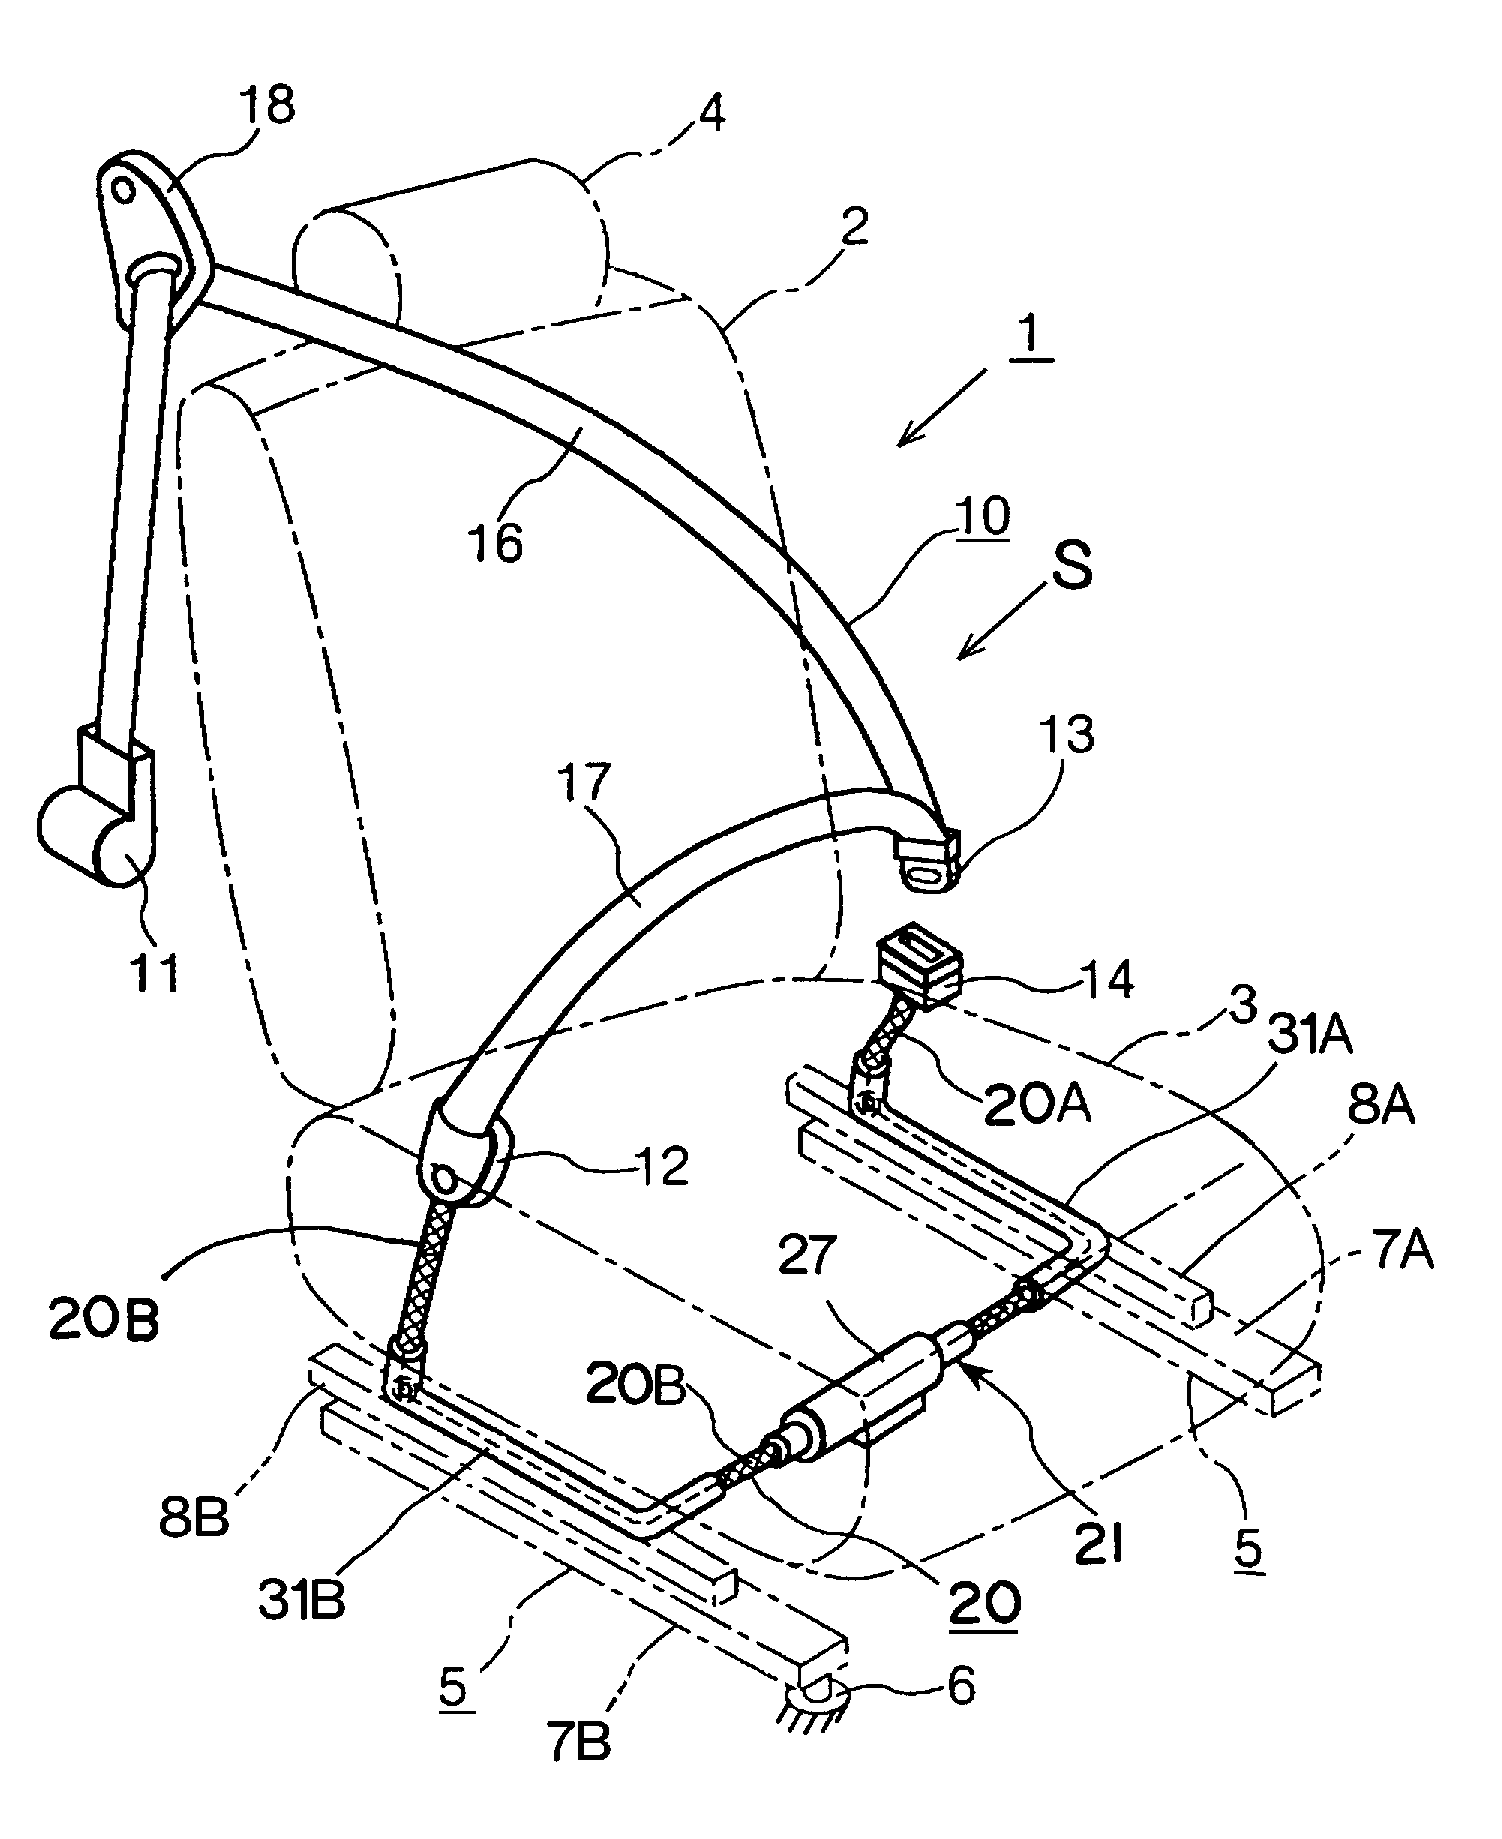 Seatbelt pretensioner mechanism for vehicle seat